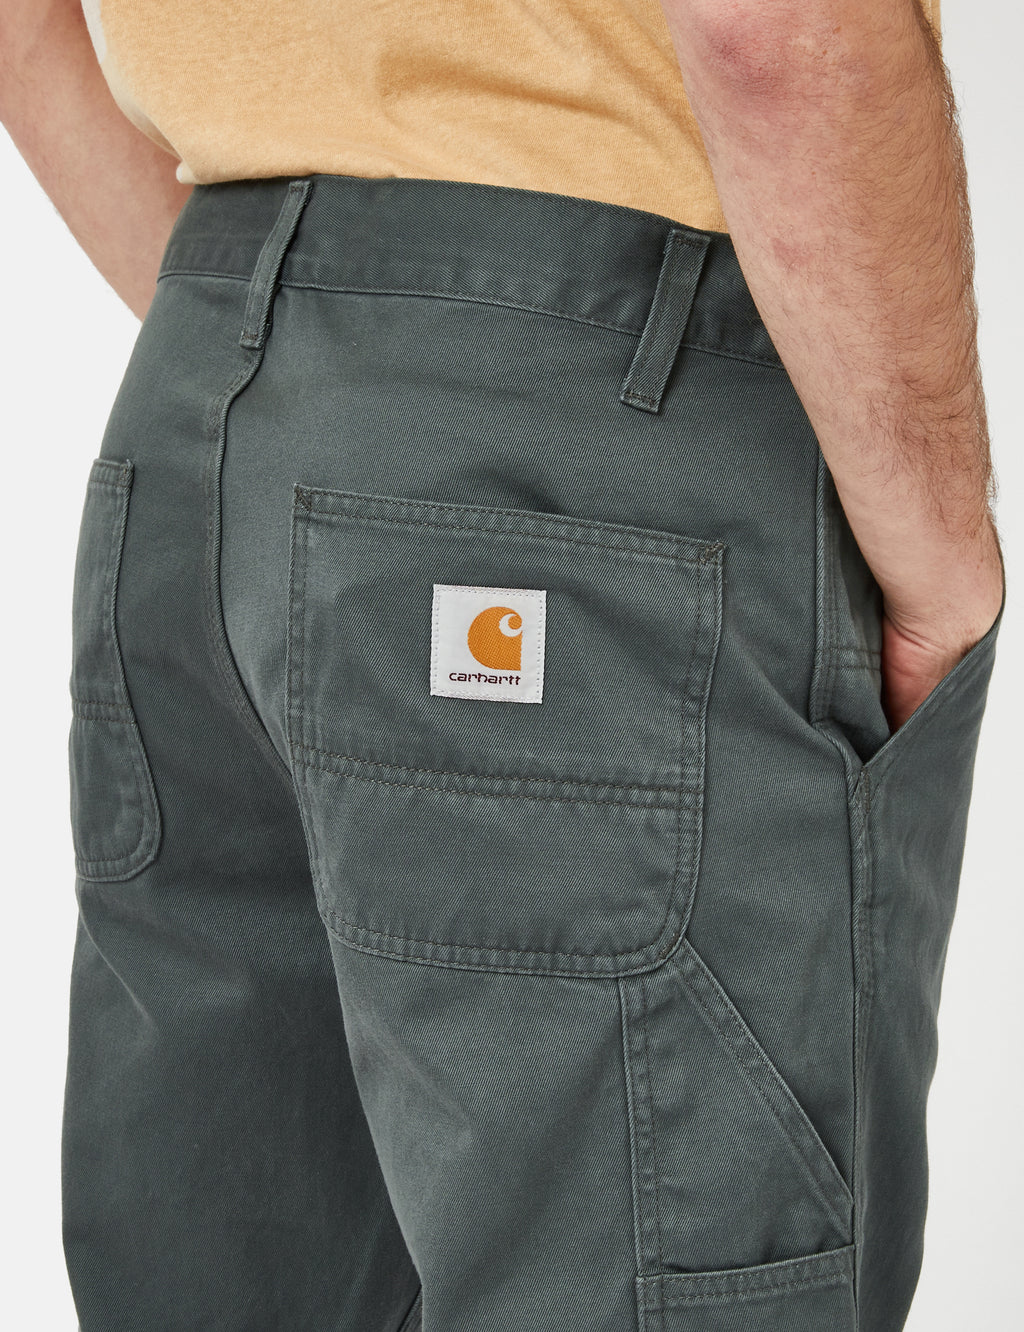 Carhartt-WIP Ruck Single Knee Pant (Regular) - Jura Stone Washed I UE. URBAN EXCESS